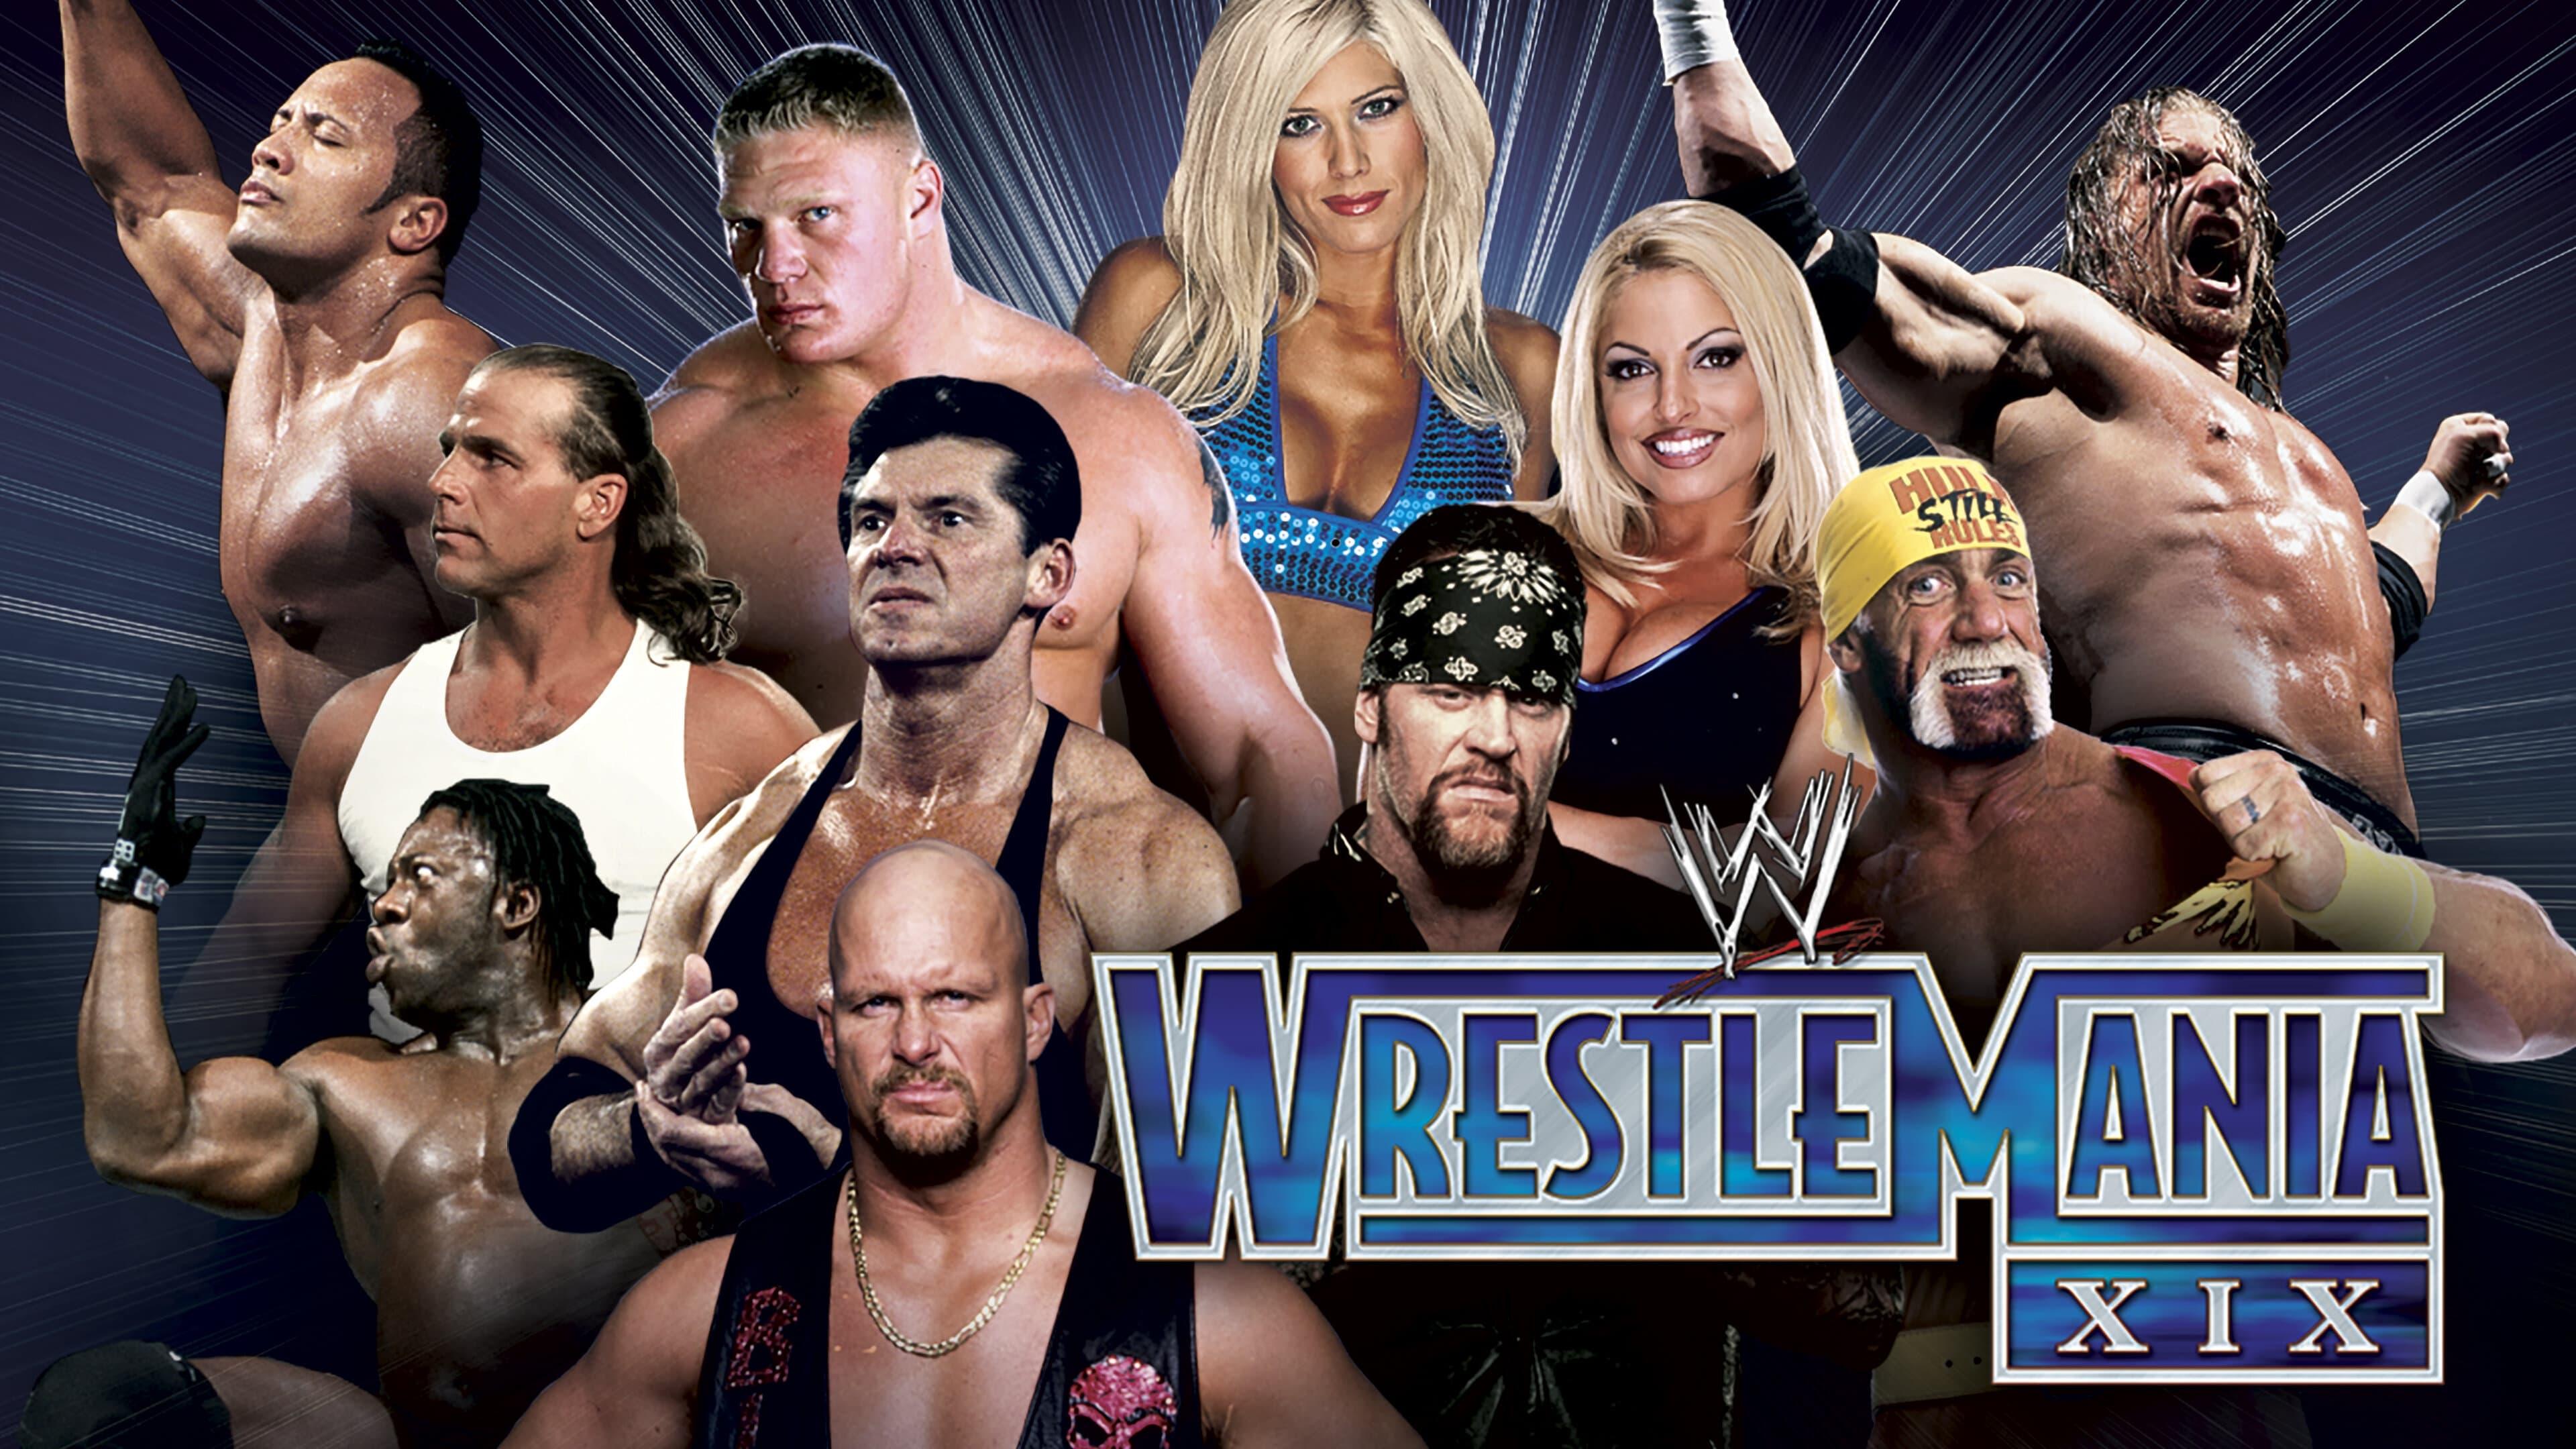 WWE Wrestlemania XIX backdrop